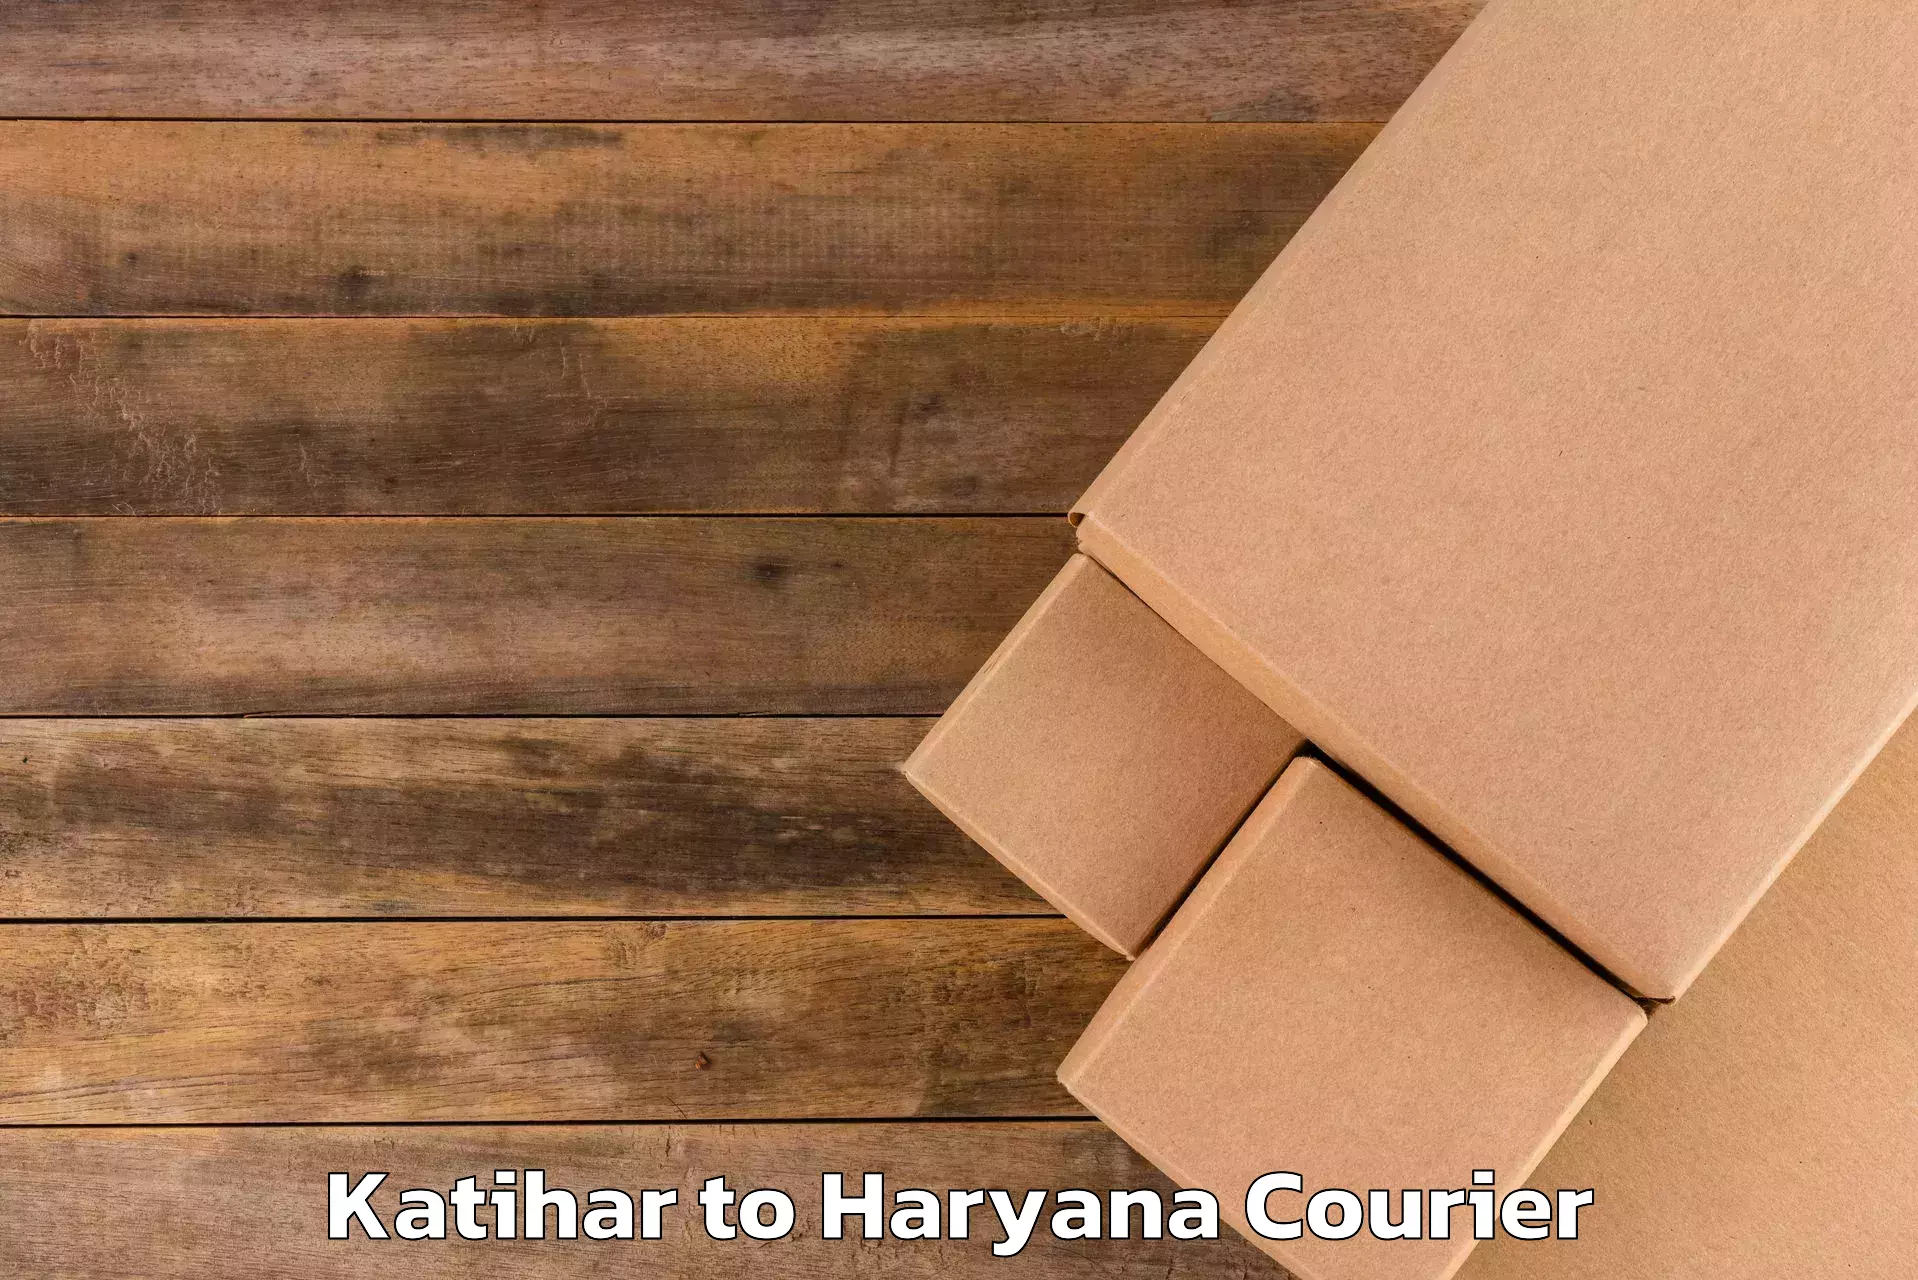 Luggage transport company Katihar to Gurgaon